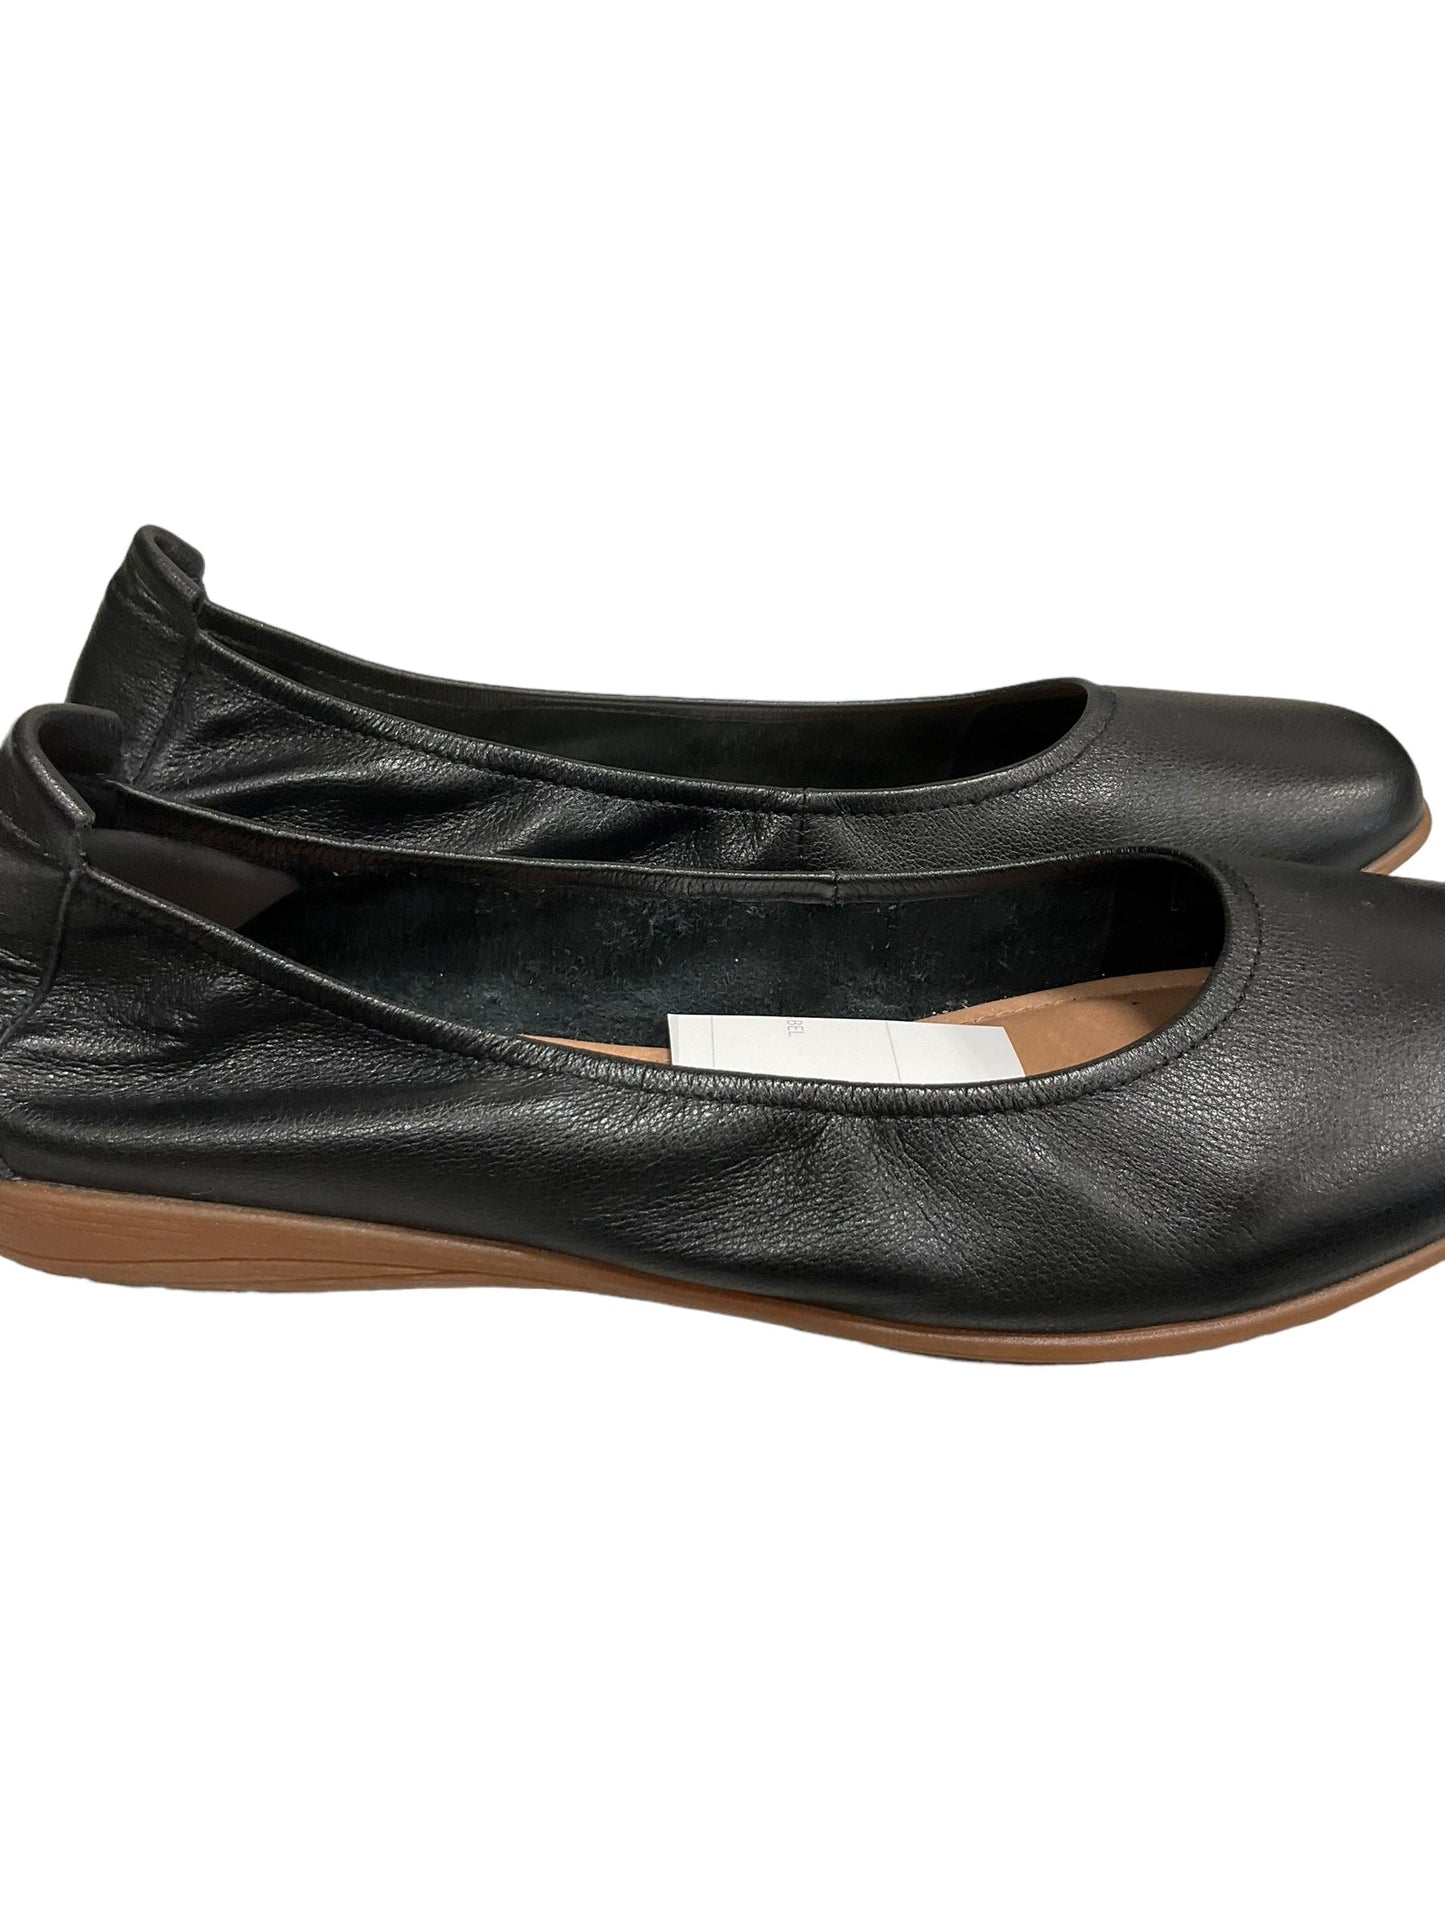 Black Shoes Flats Josef Seibel, Size 11